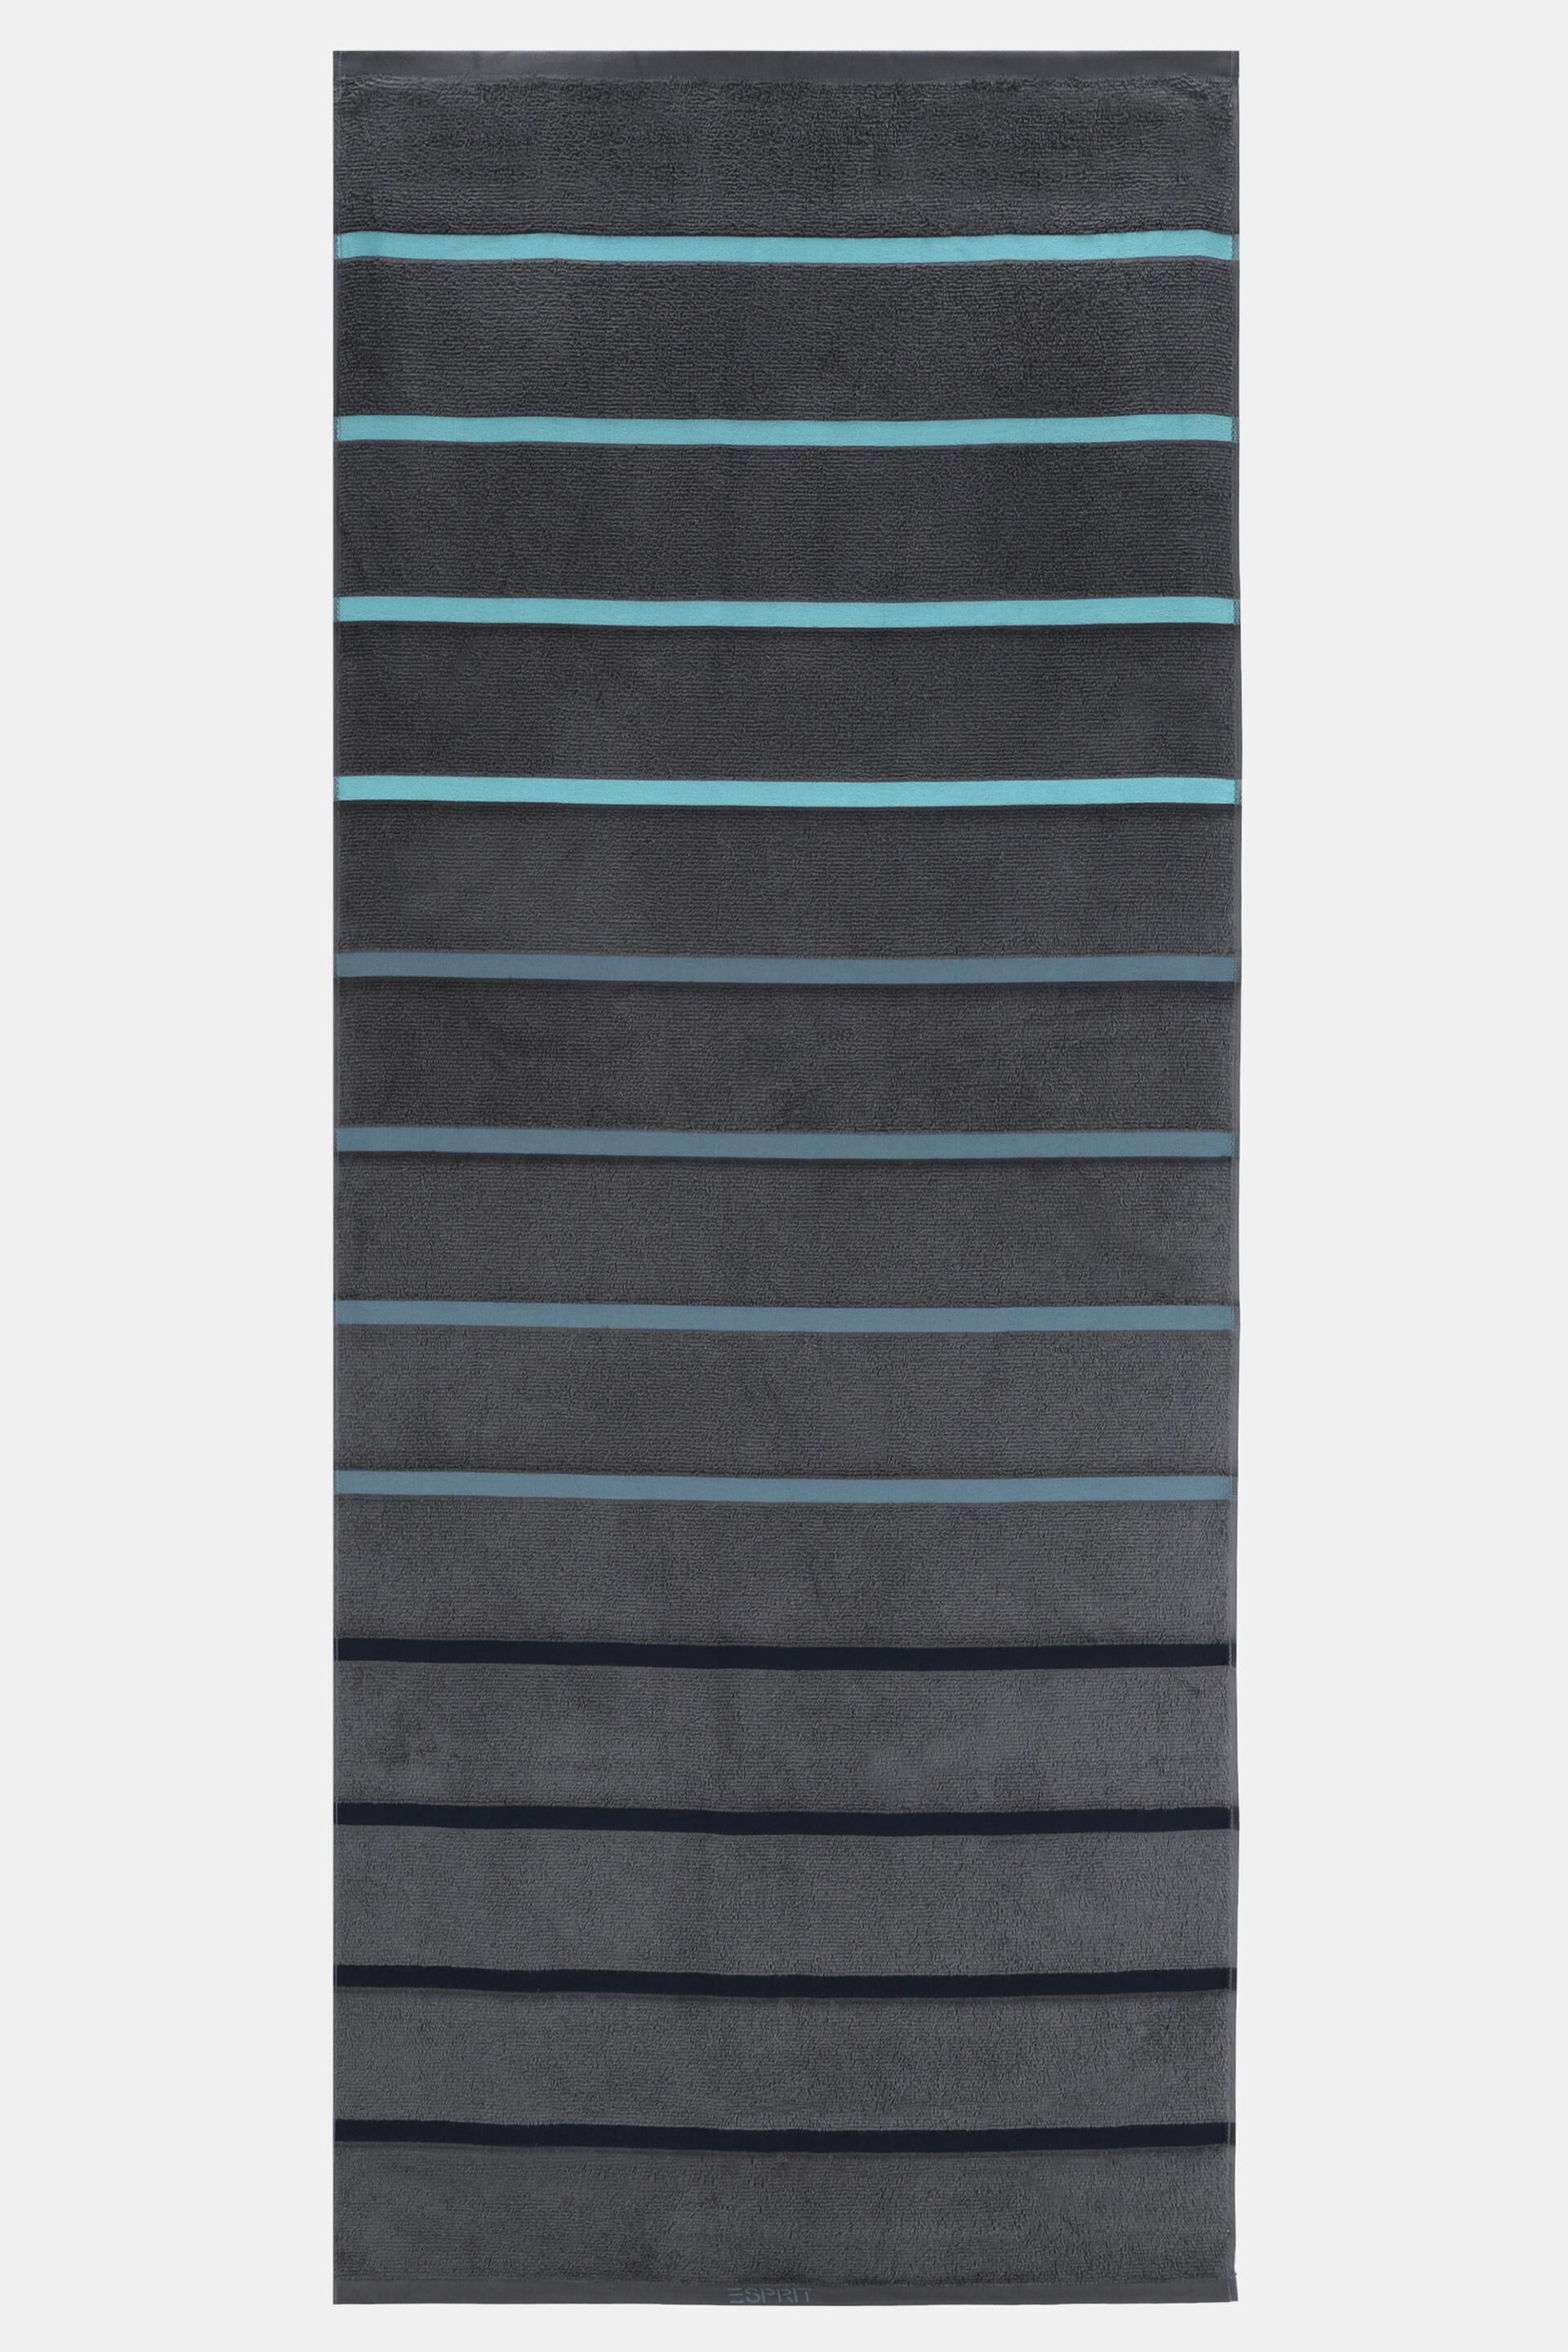 Esprit towel with Relax sauna stripes